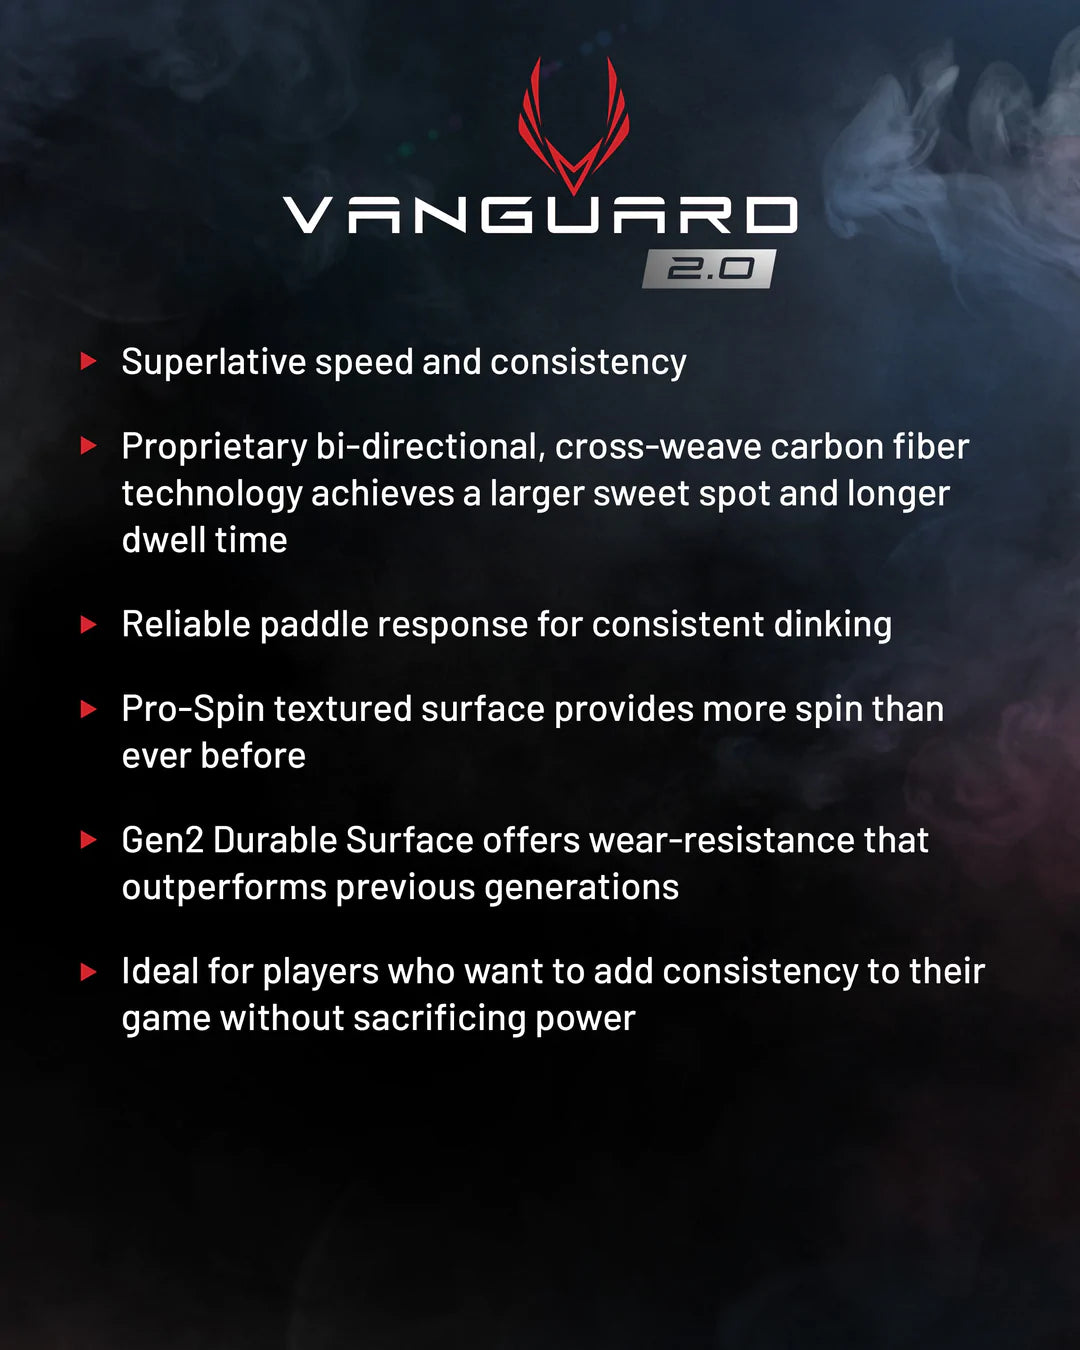 Selkirk Vanguard 2.0 S2 - Midweight